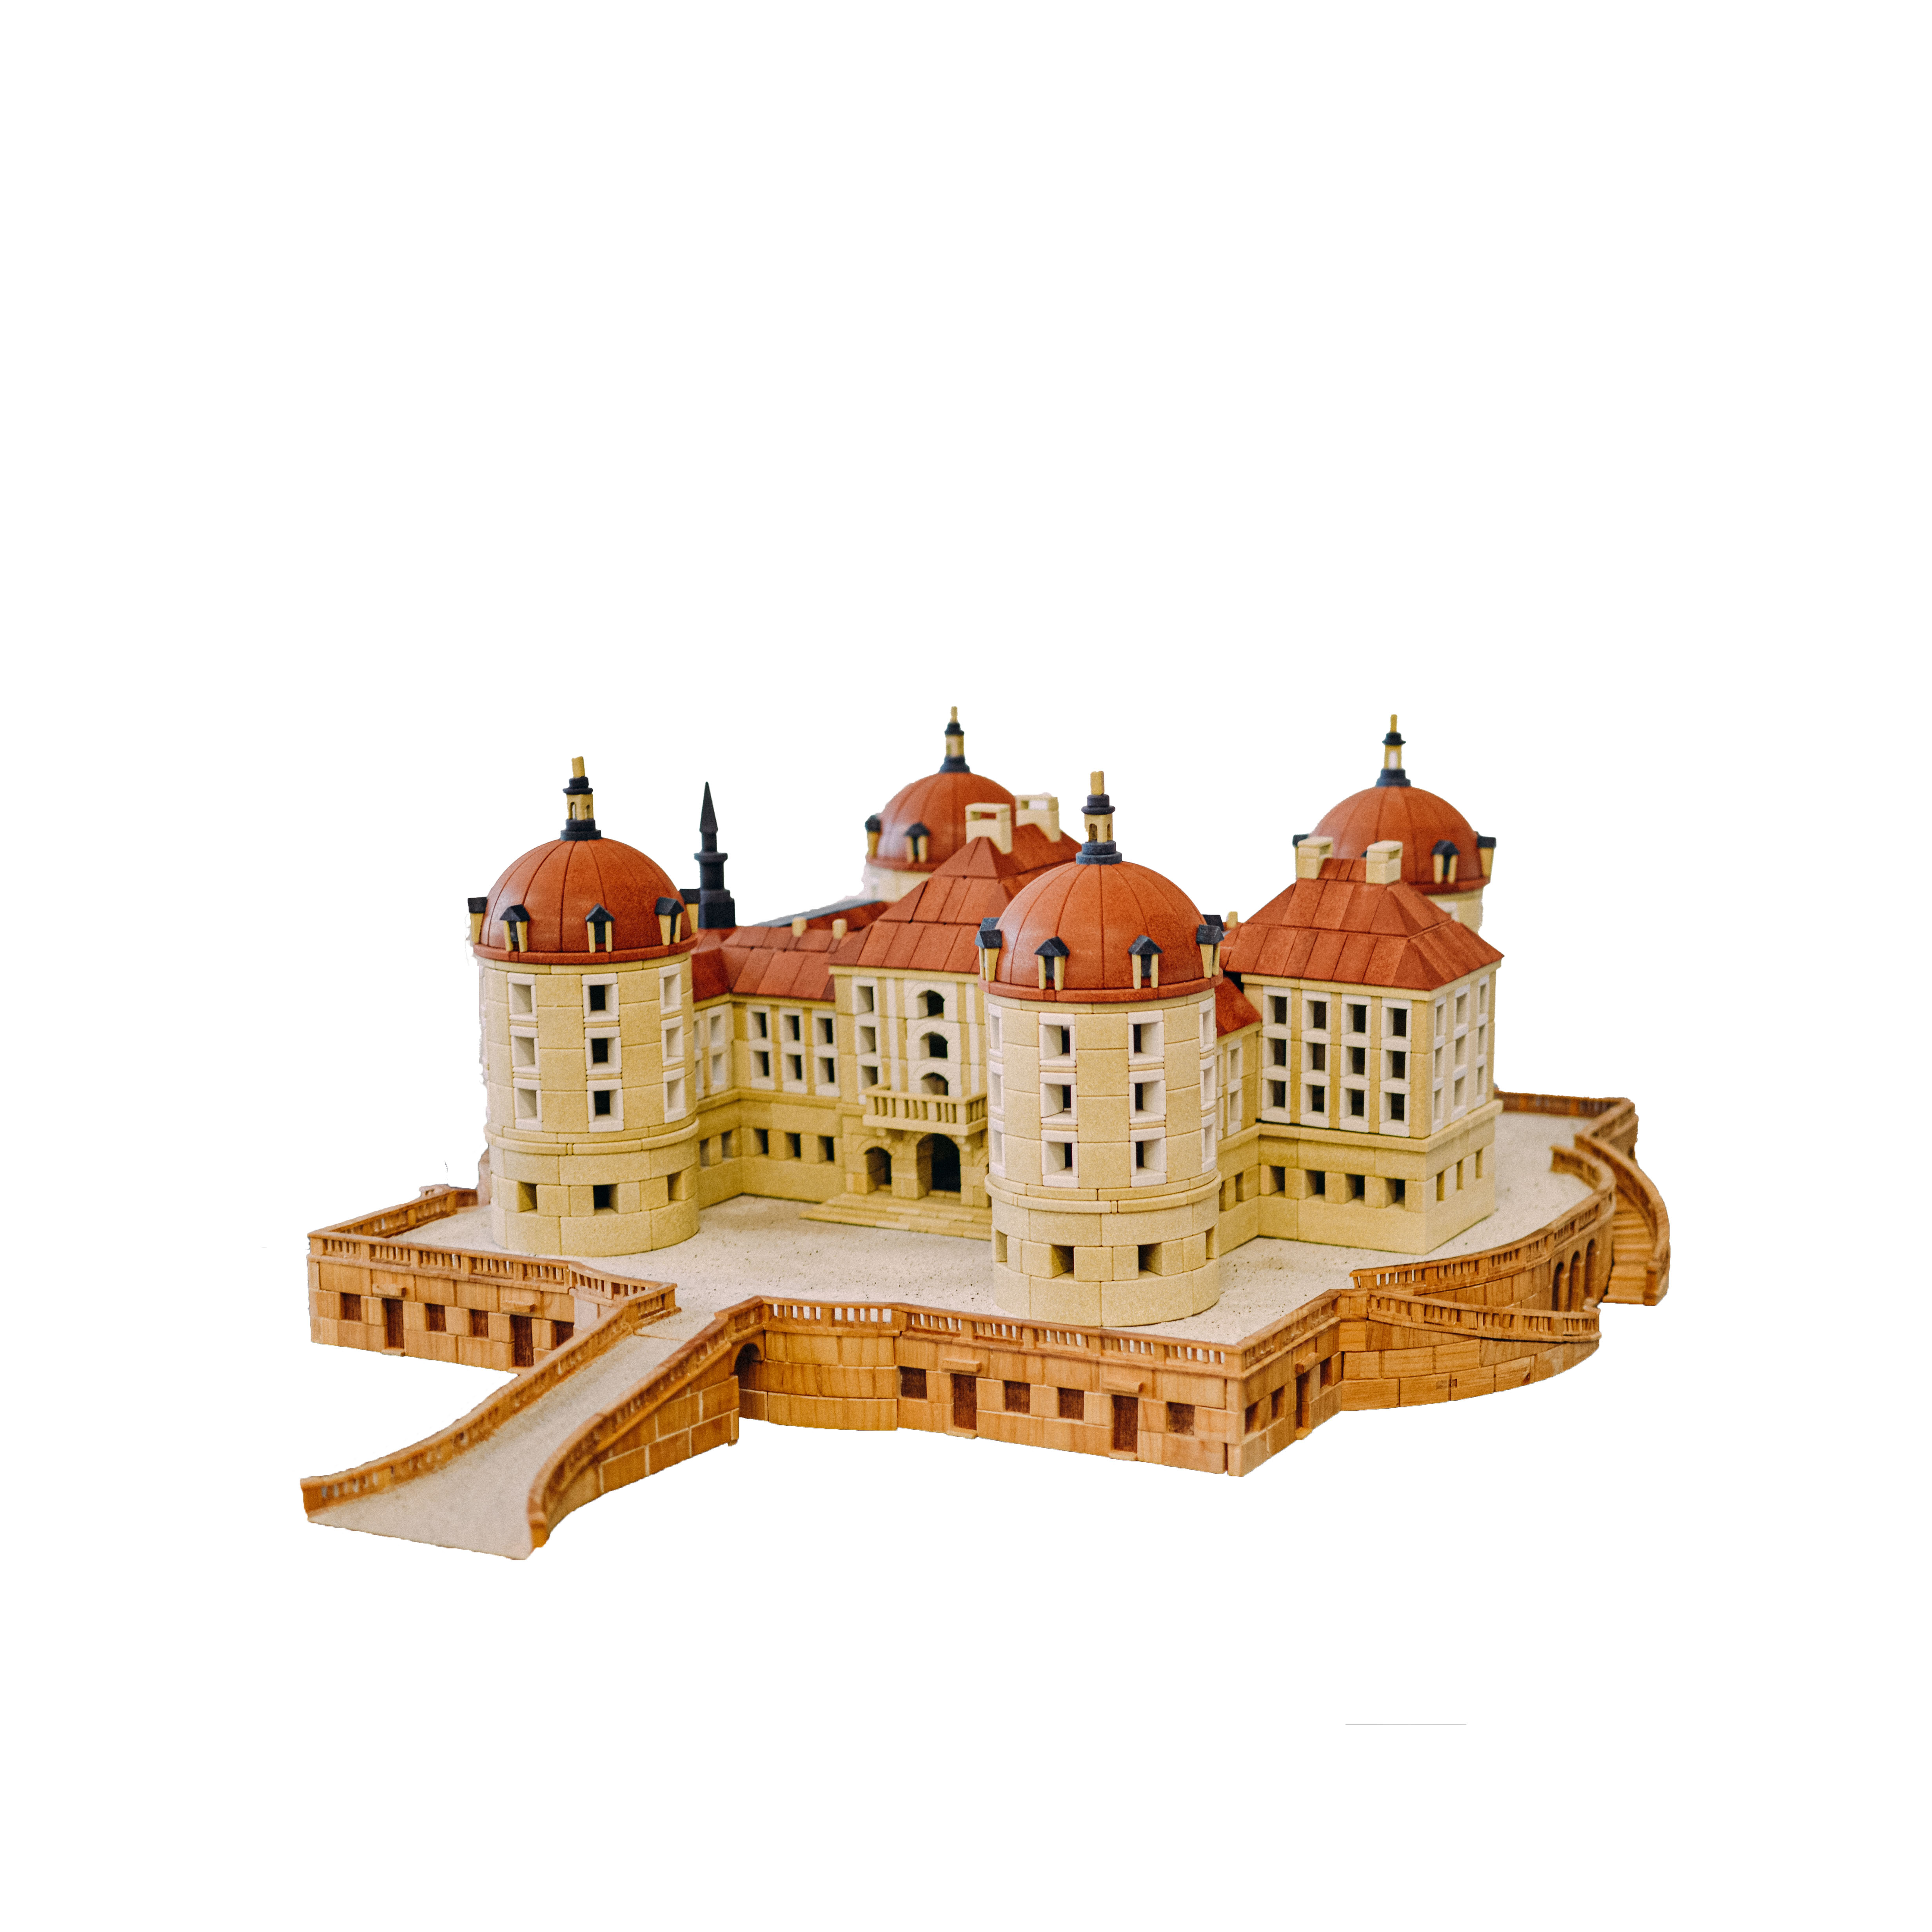 Barockschloss Moritzburg - Komplettbausatz mit allen sieben Kästen